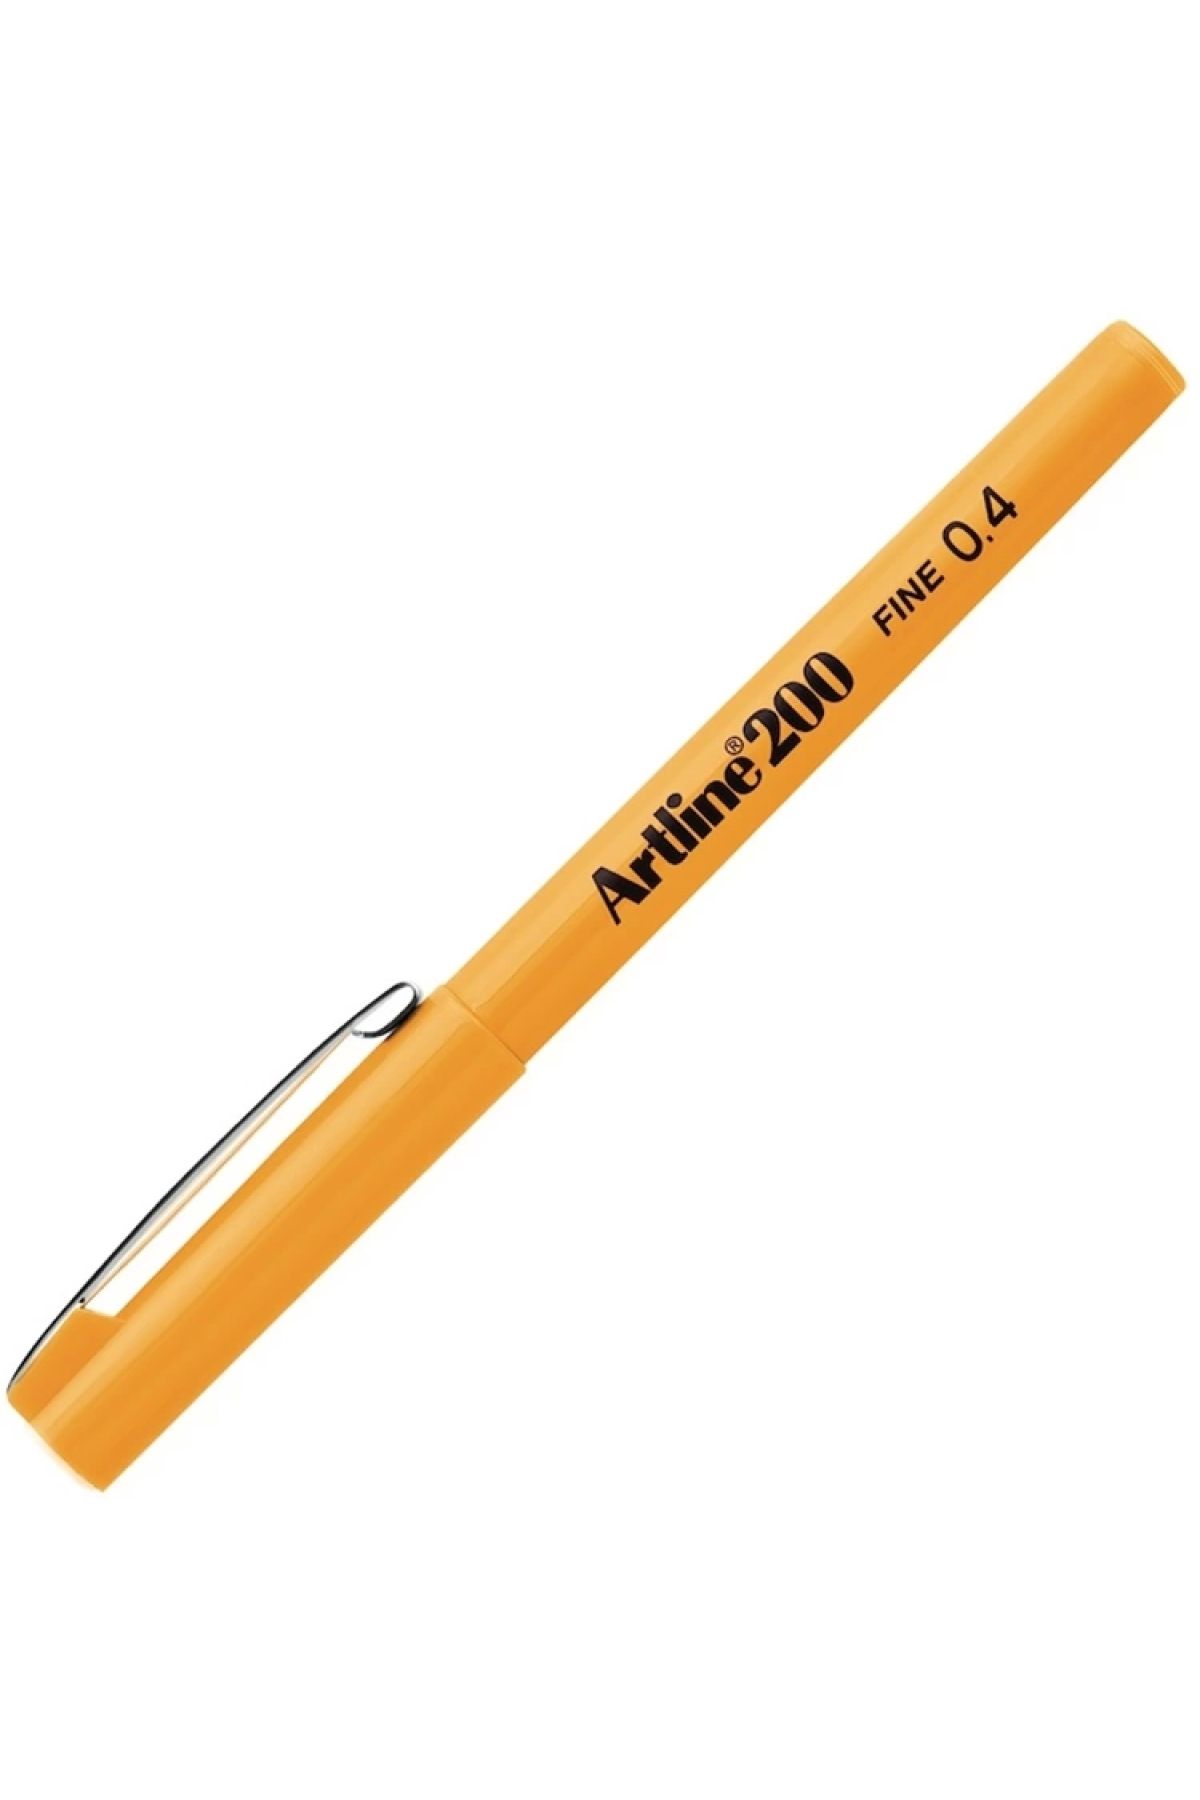 artline Artlıne Ek-200n Fıne Lıne Pen 0.4 Mm Yellow